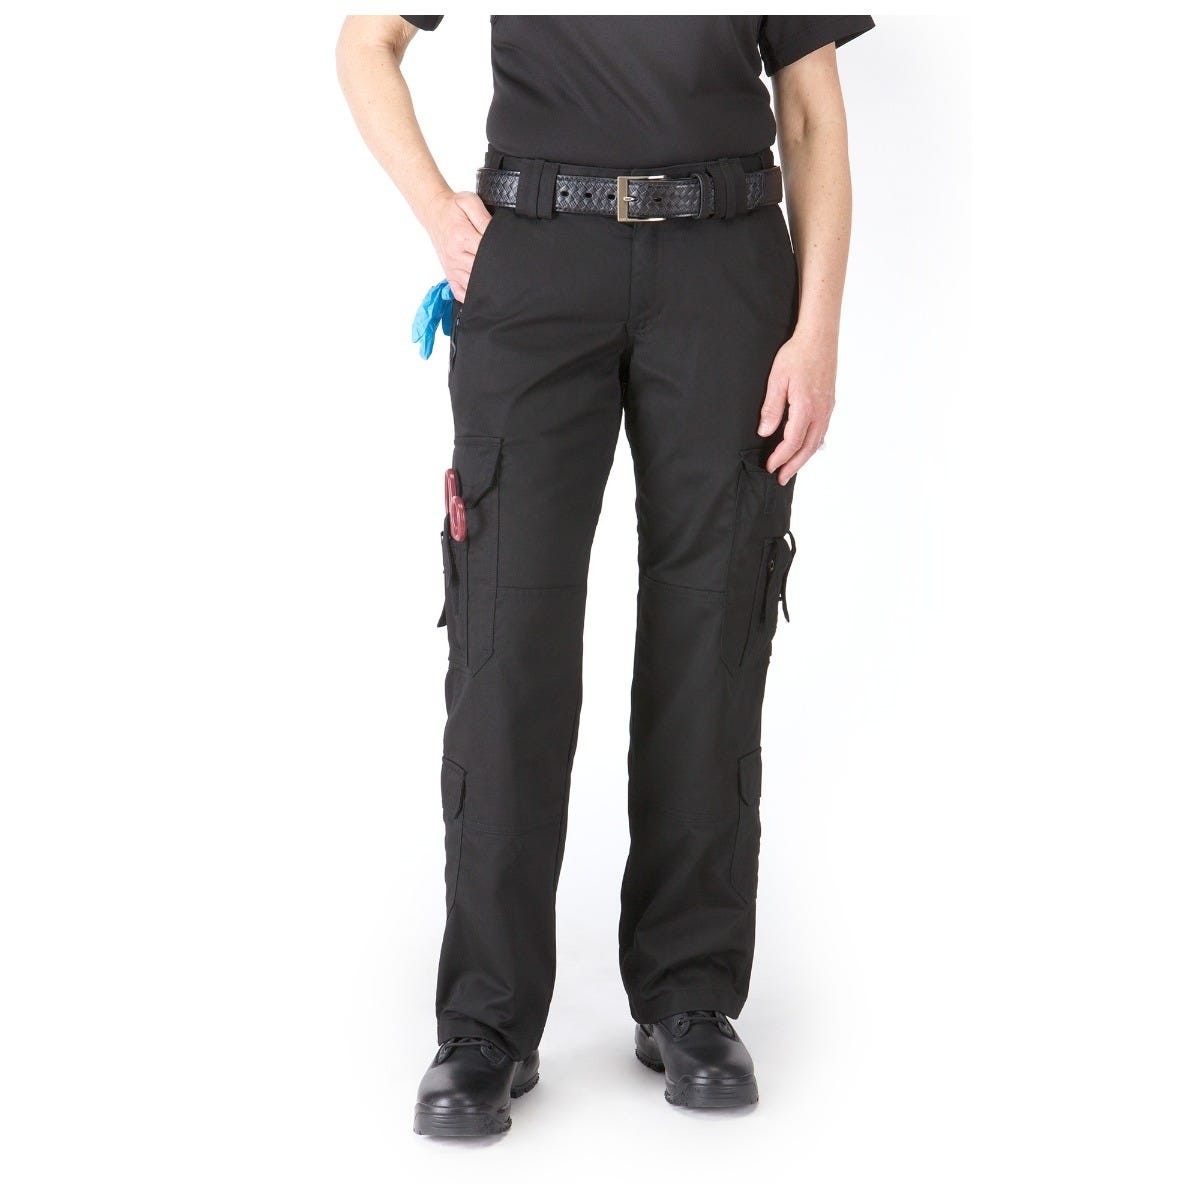 Pants - 5.11 Tactical Women's EMS Pants